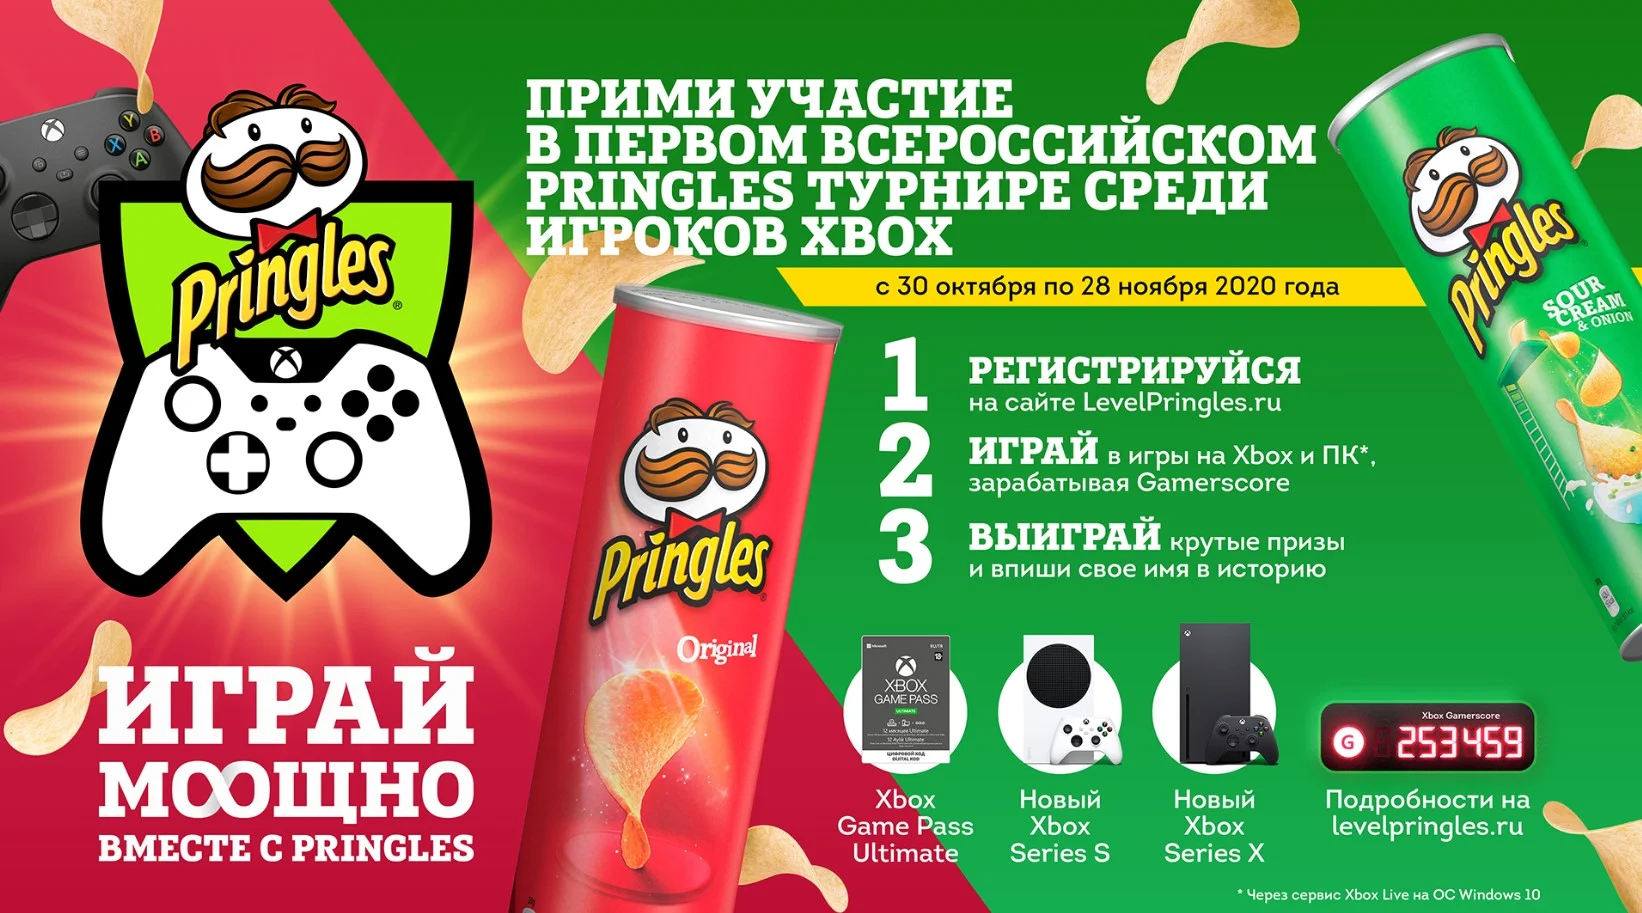 Pringles проводит турнир среди игроков на Xbox - фото 1